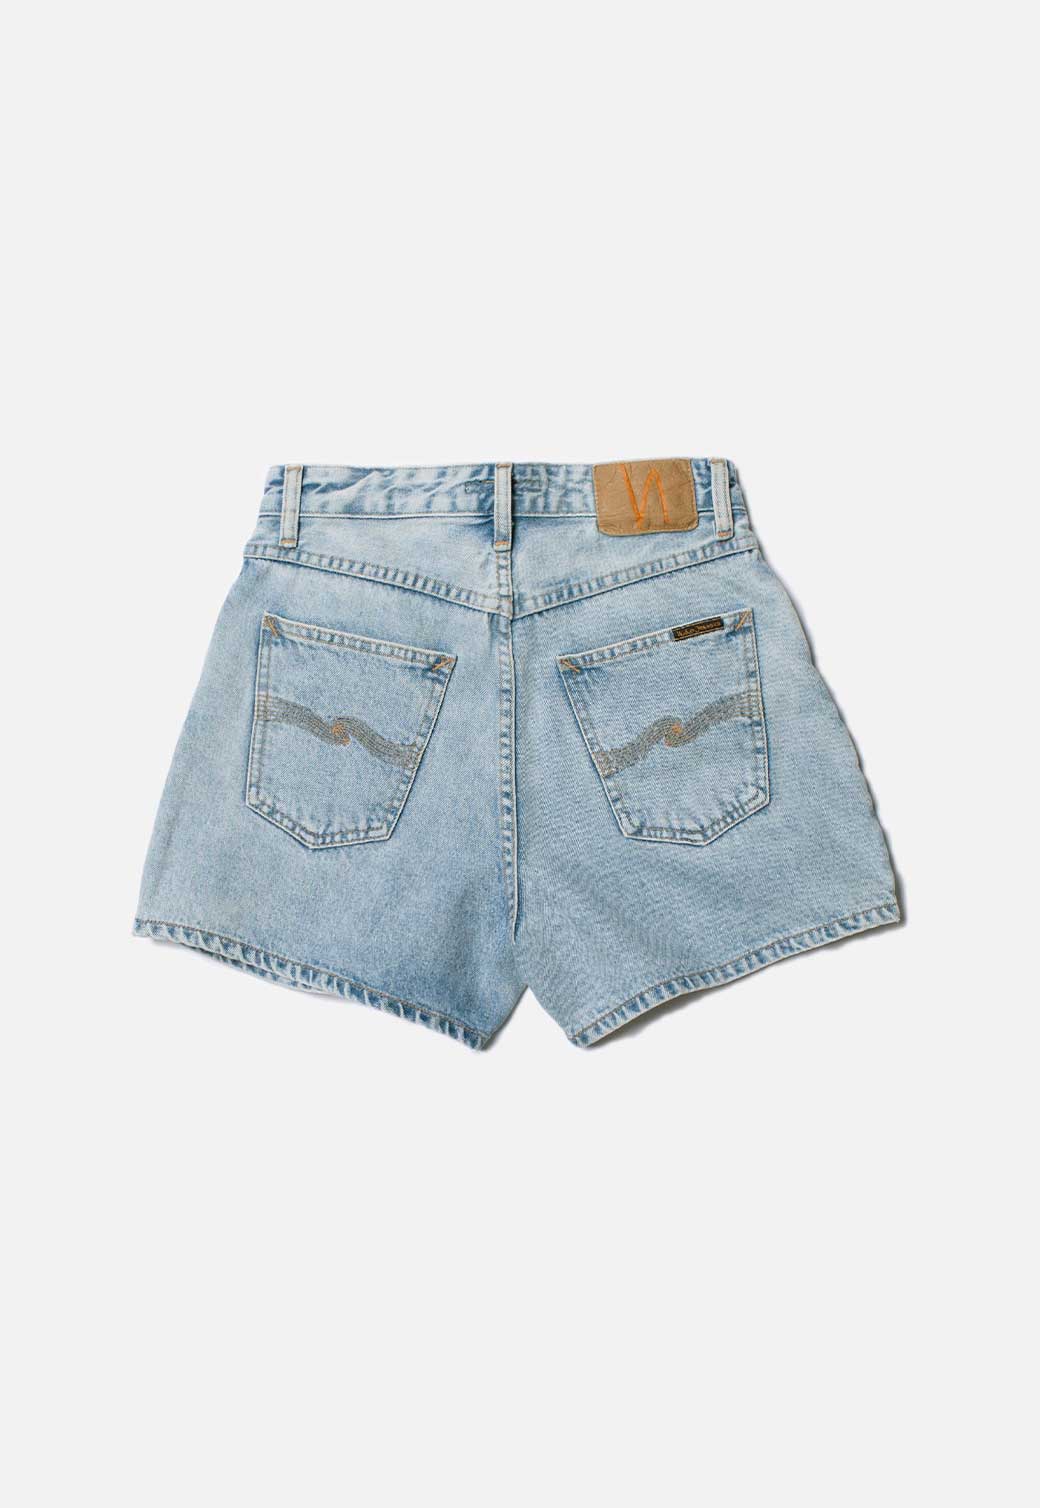 White Smoke ג'ינס קצר לנשים Maeve Shorts - Sunny Blue NUDIE